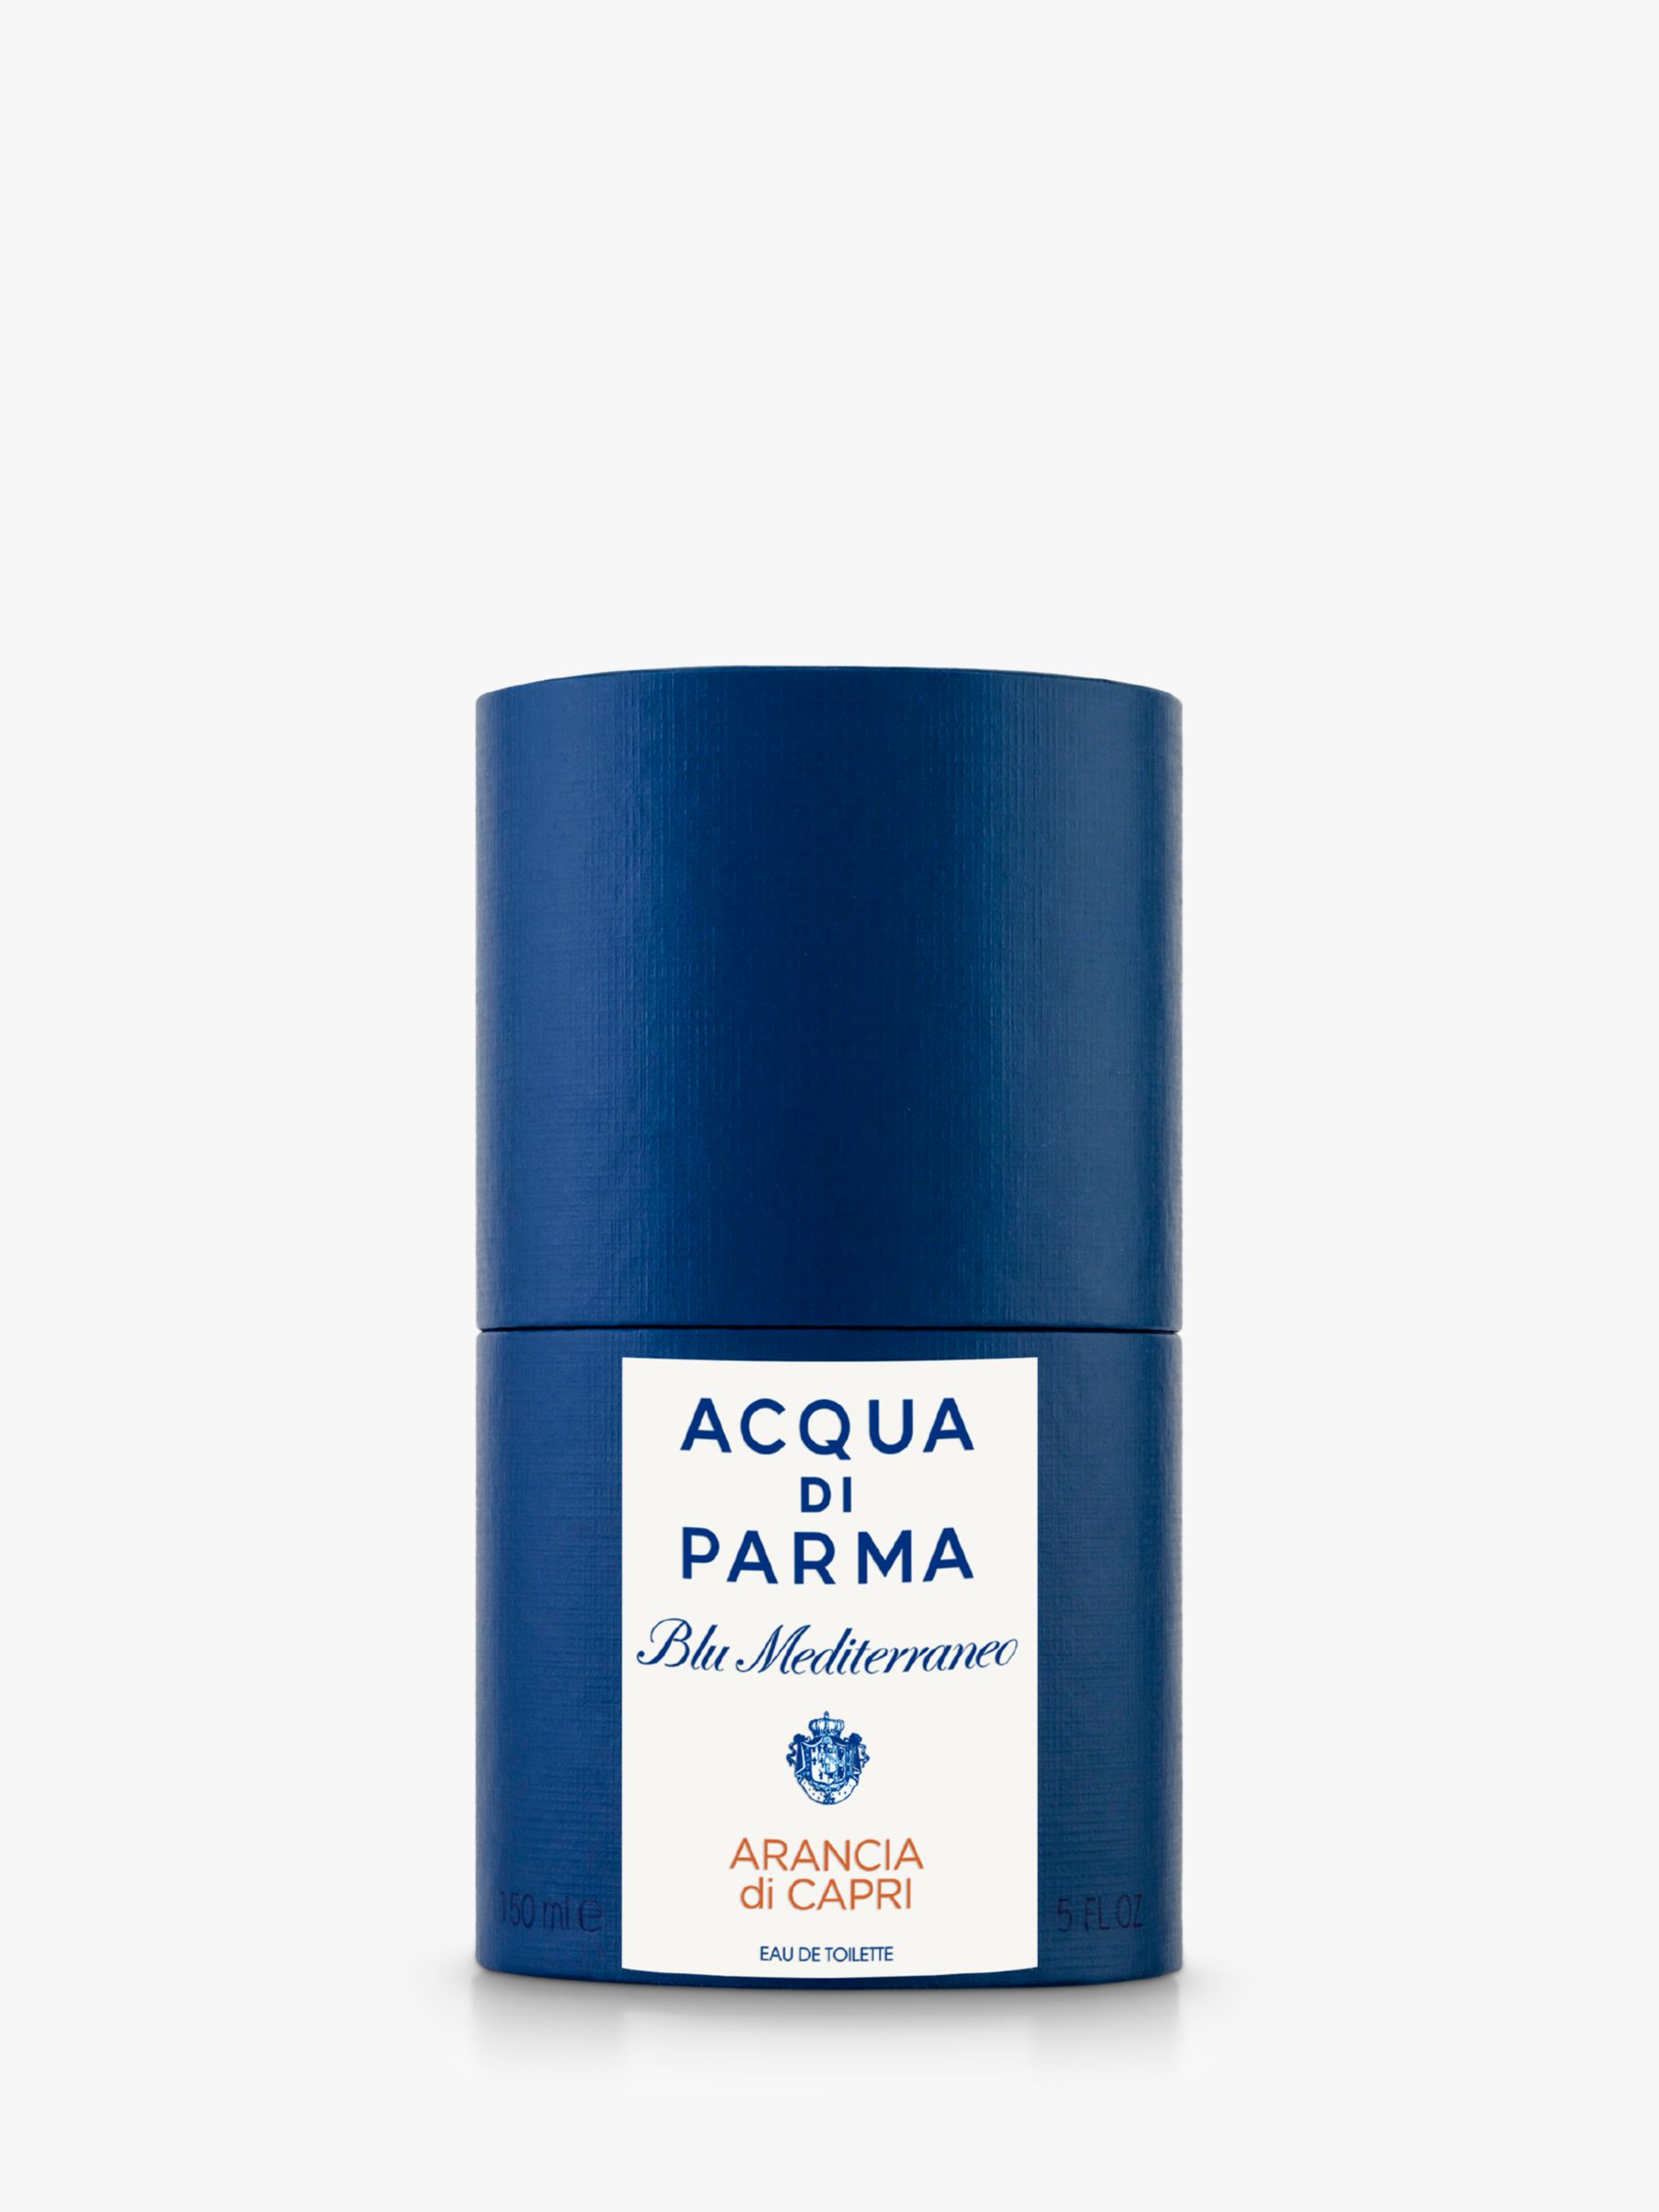 Acqua Di Parma Blu Mediterraneo Arancia Di Capri Eau De Toilette Spray At John Lewis Partners